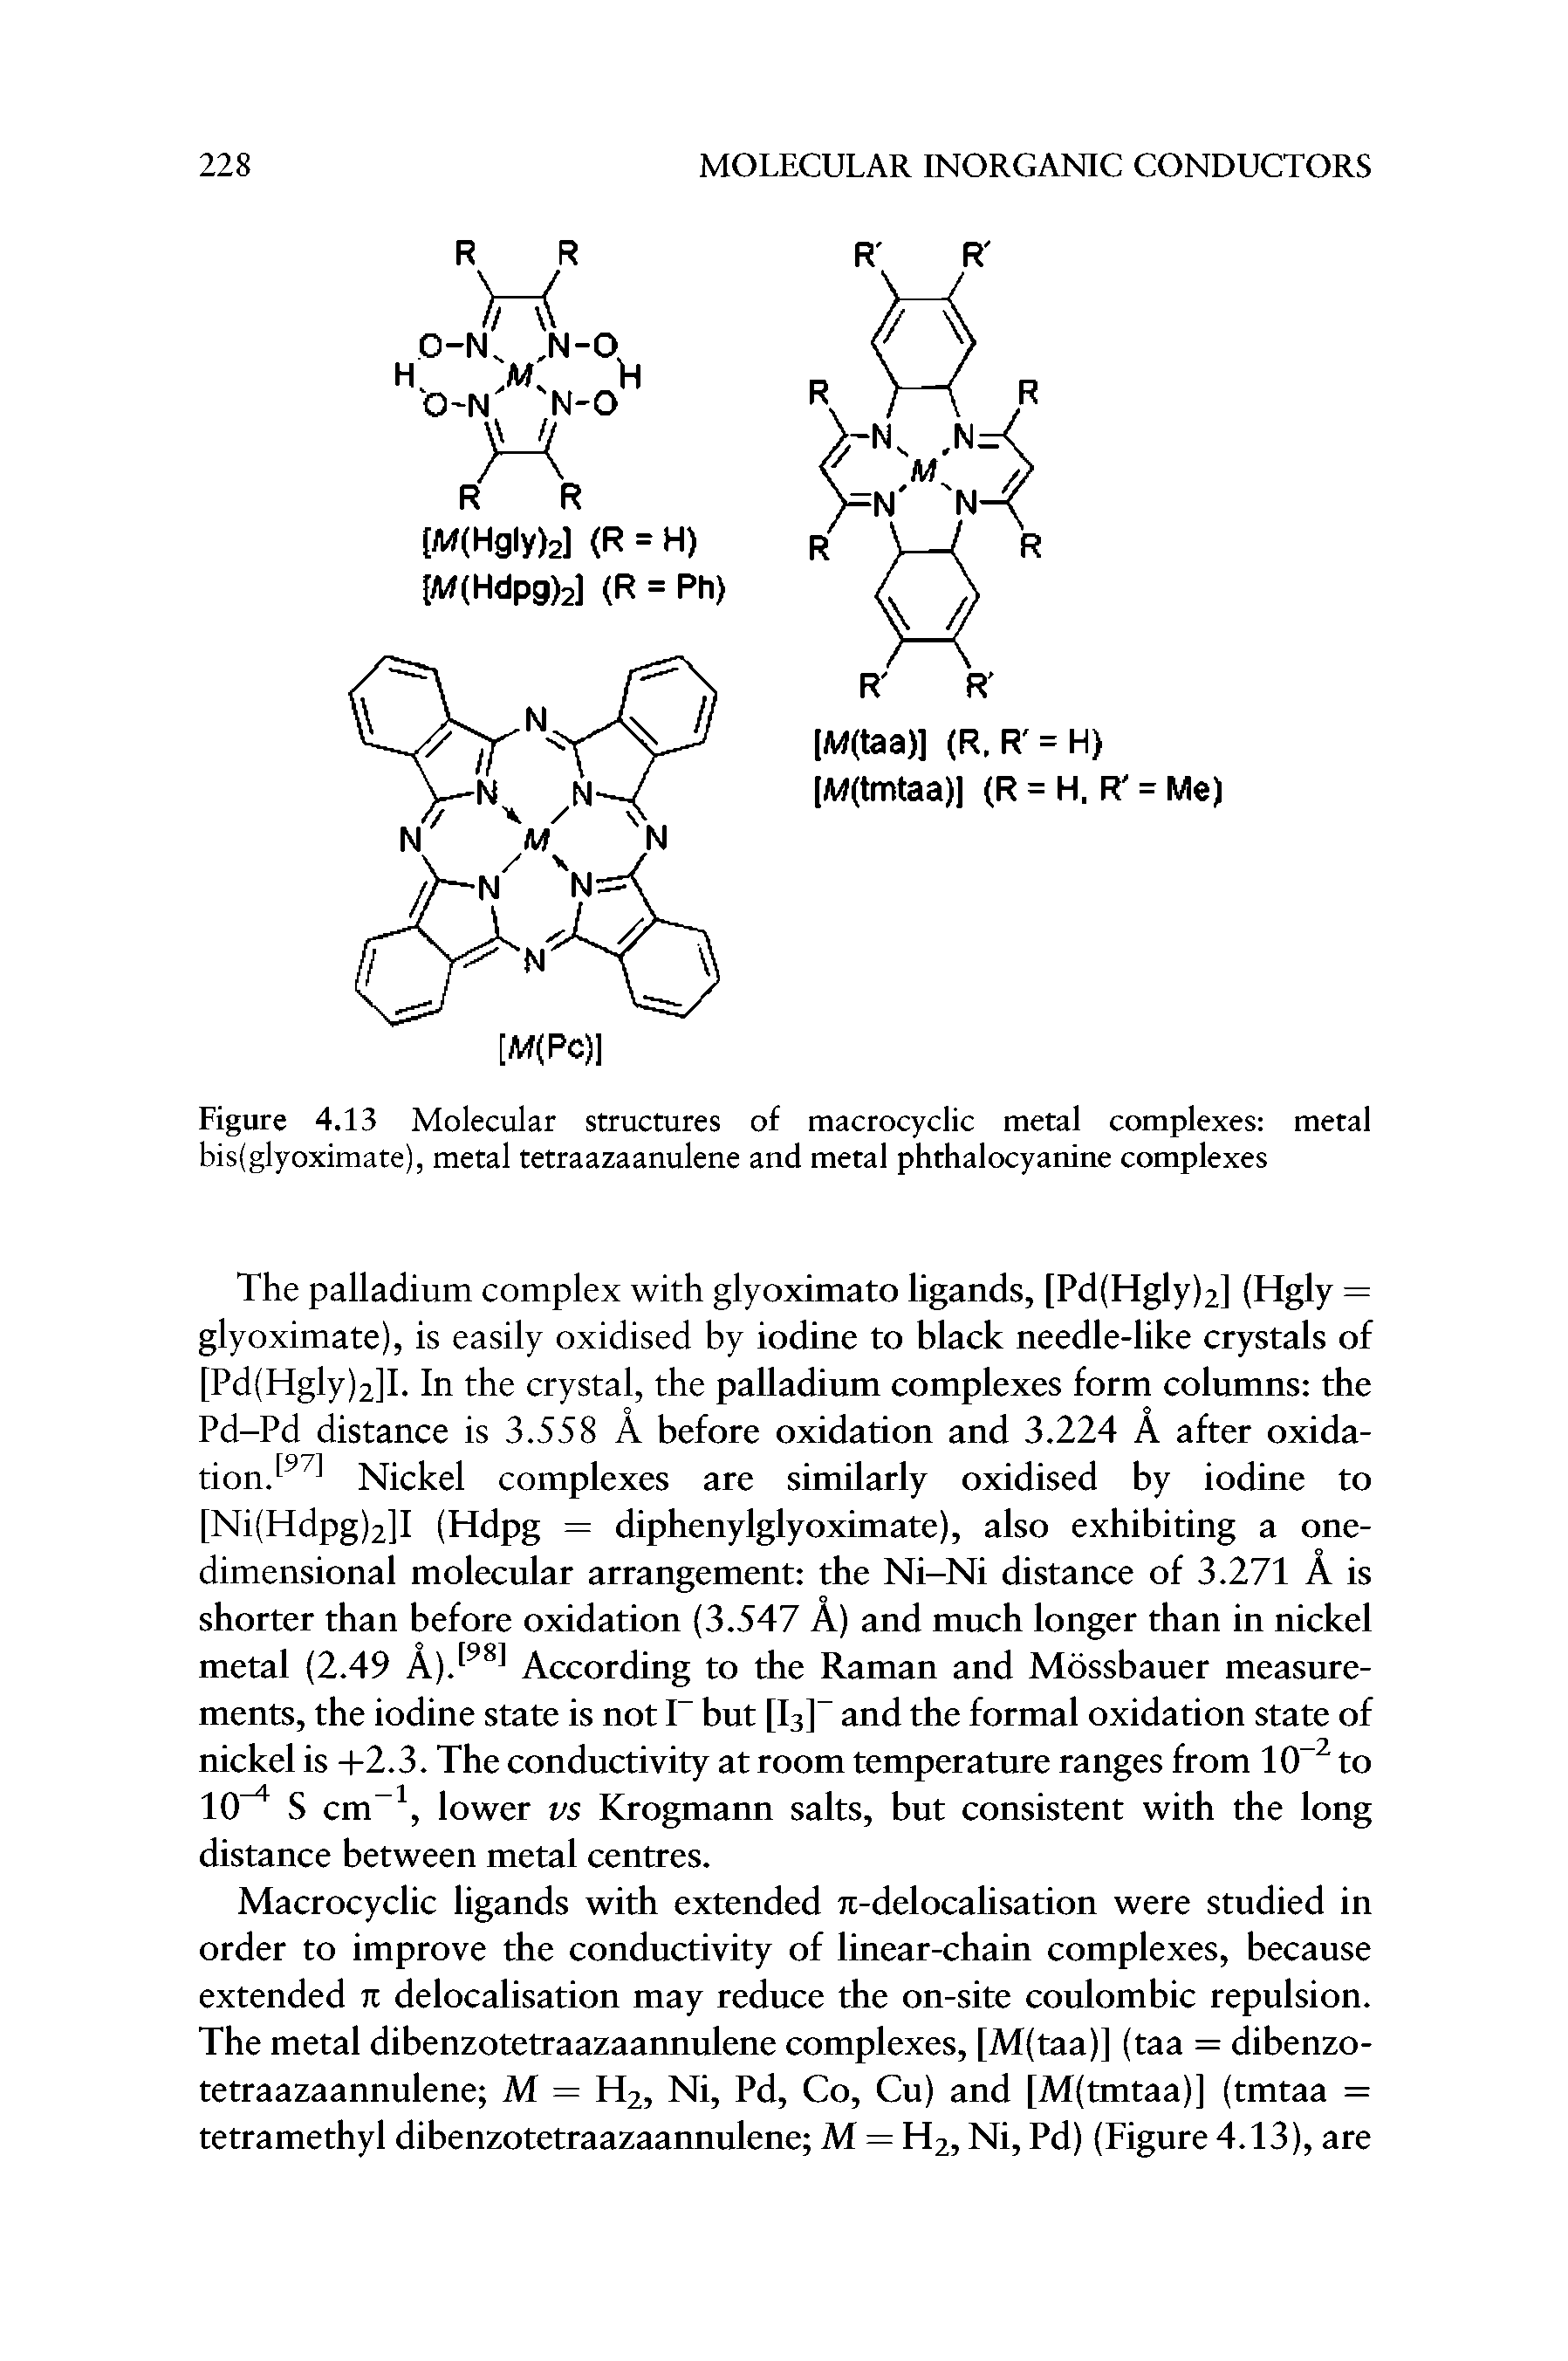 Figure 4.13 Molecular structures of macrocyclic metal complexes metal bis(glyoximate), metal tetraazaanulene and metal phthalocyanine complexes...